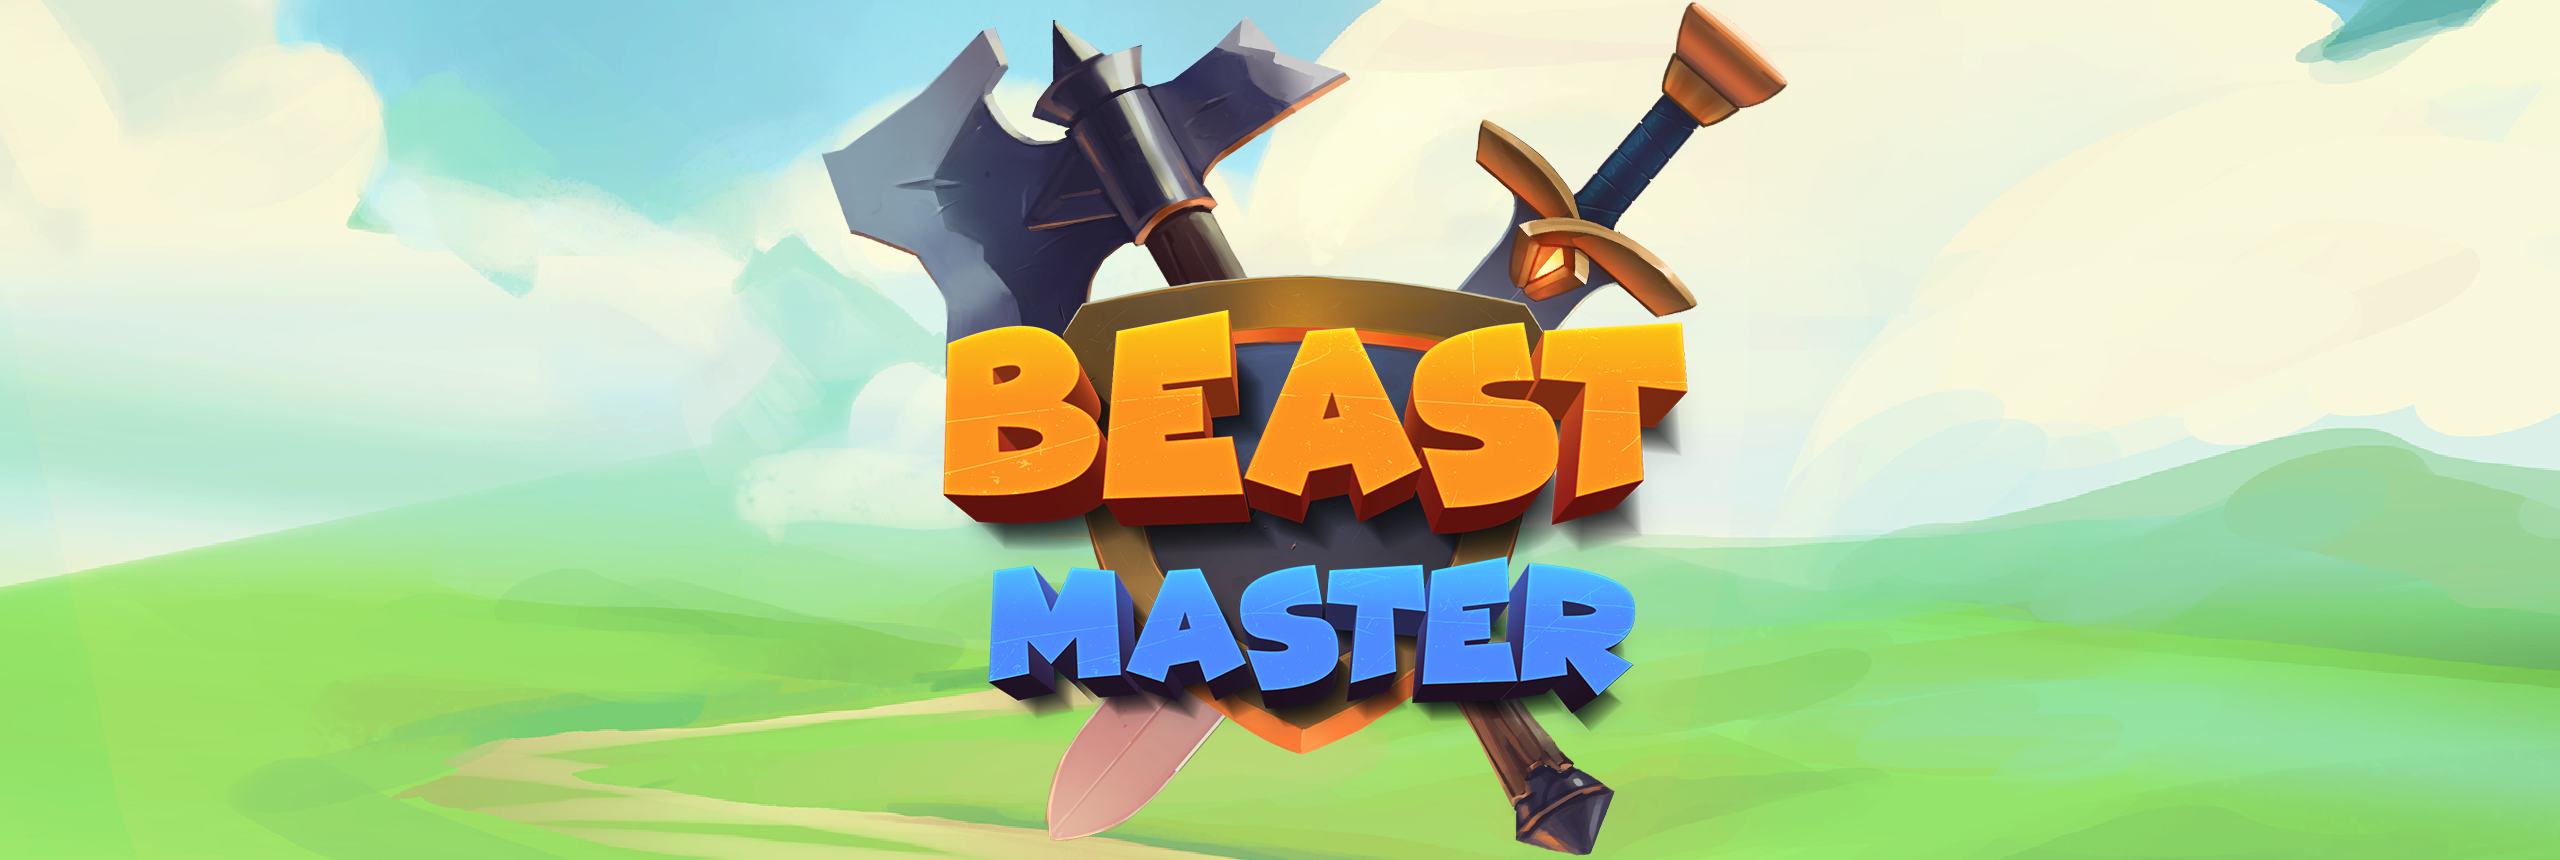 Master Development. Master beast